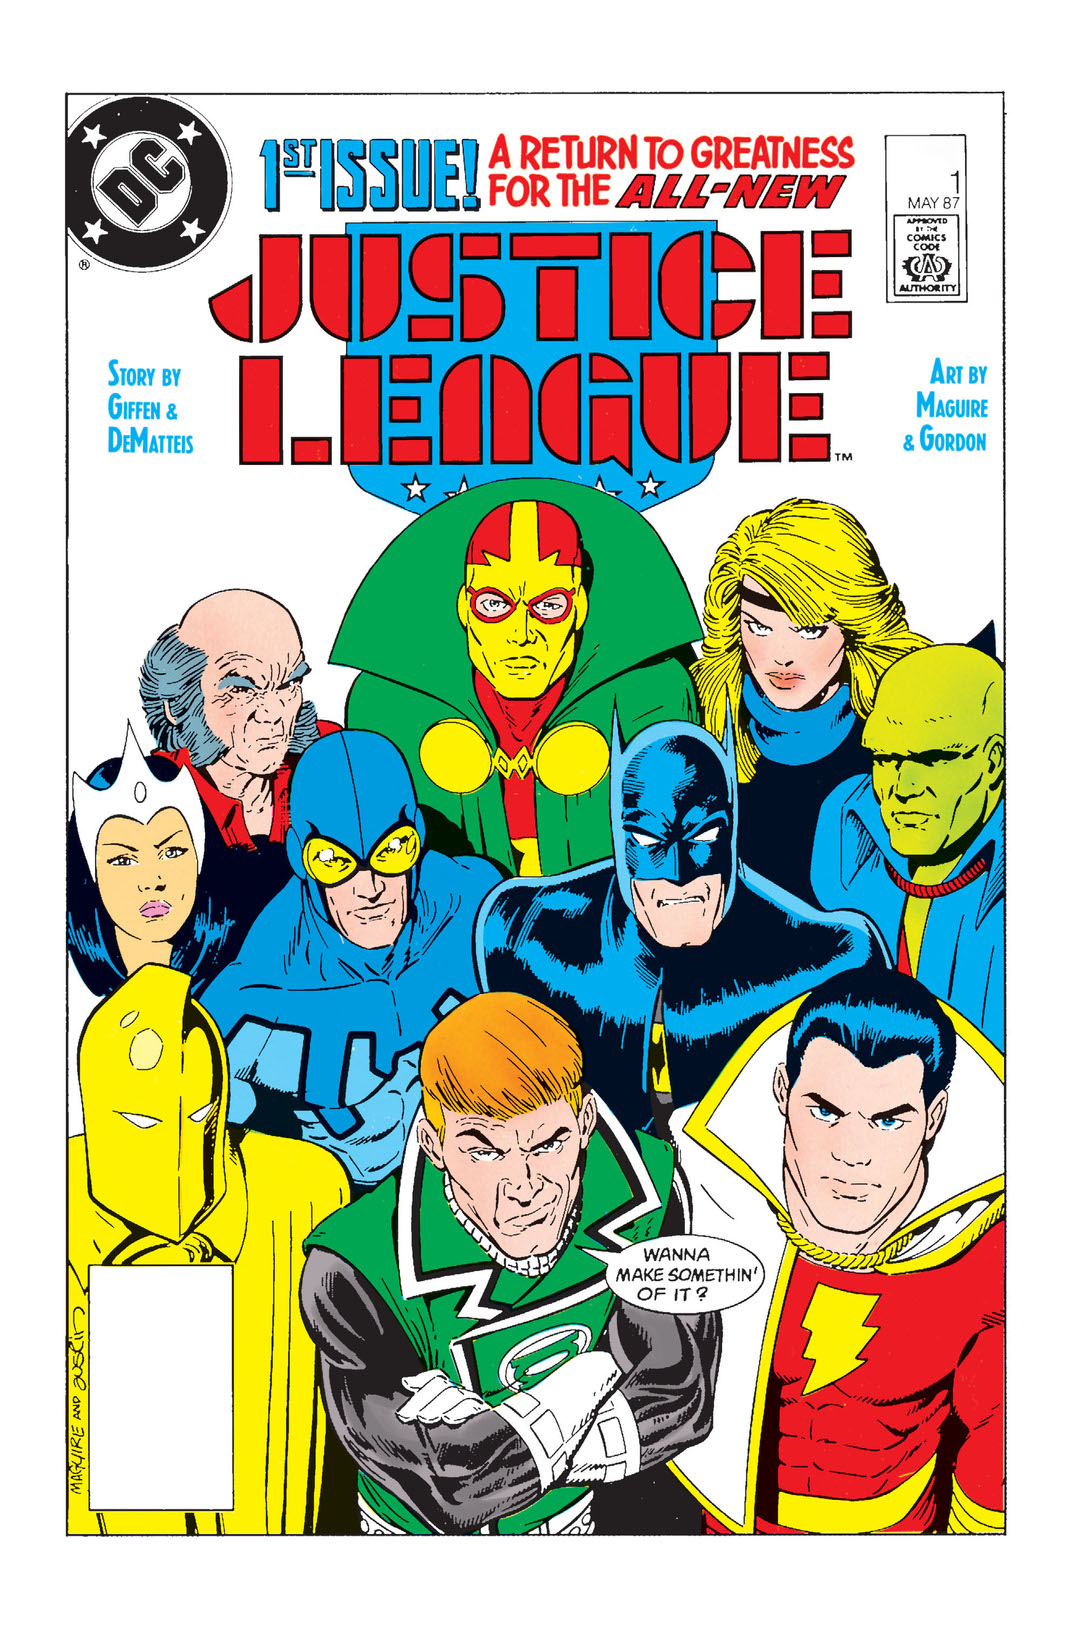 Justice League (1987-1996) #1 preview images